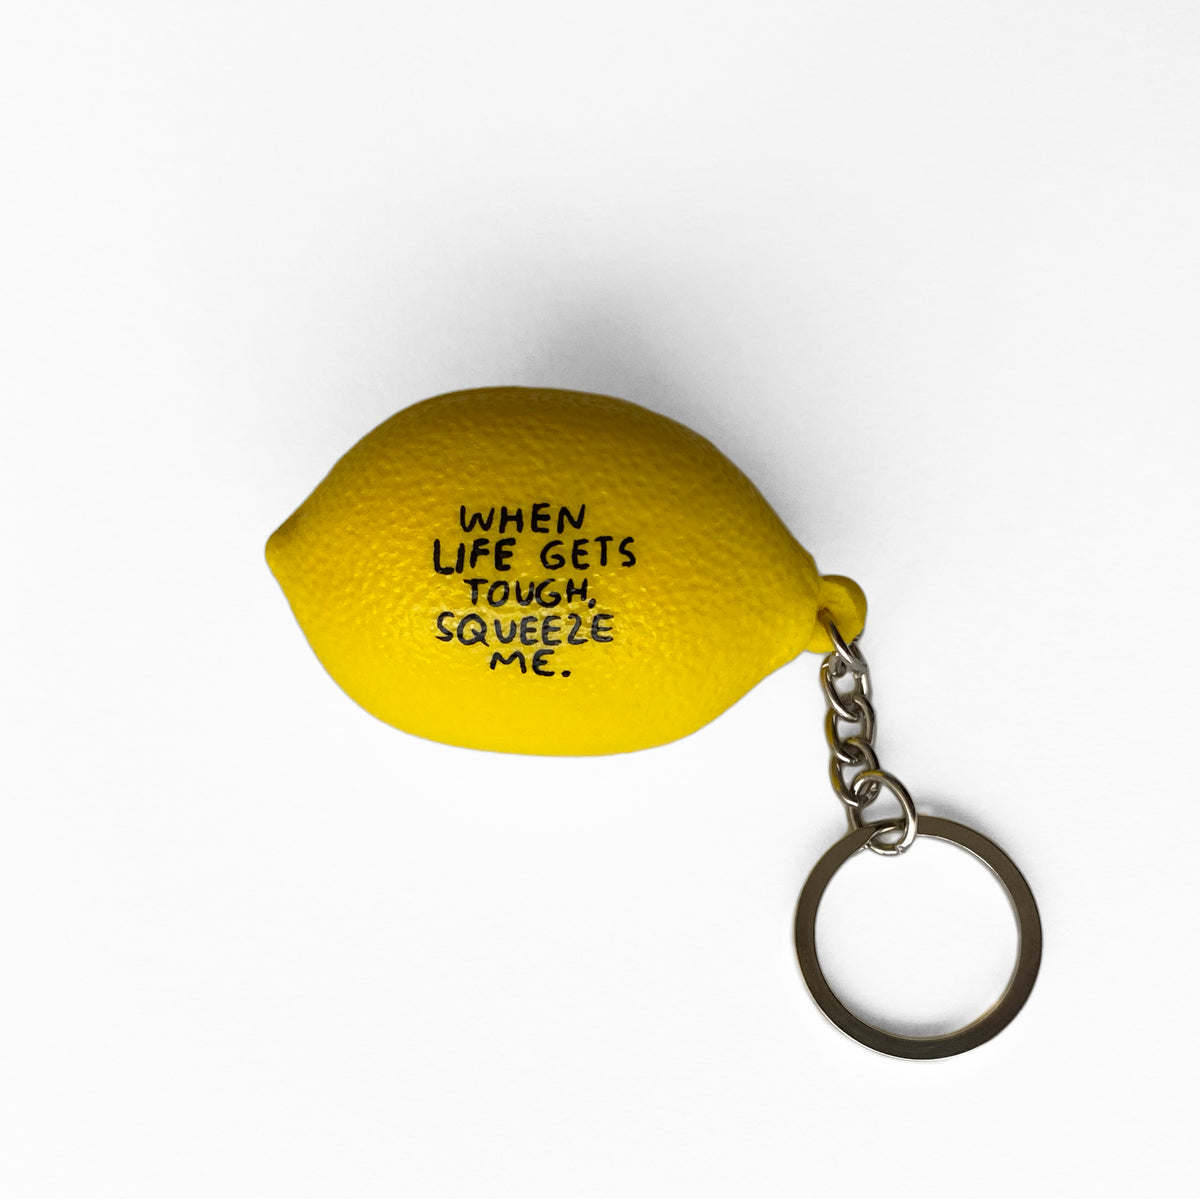 Lemon Stress Ball Keychain — The DIME Store